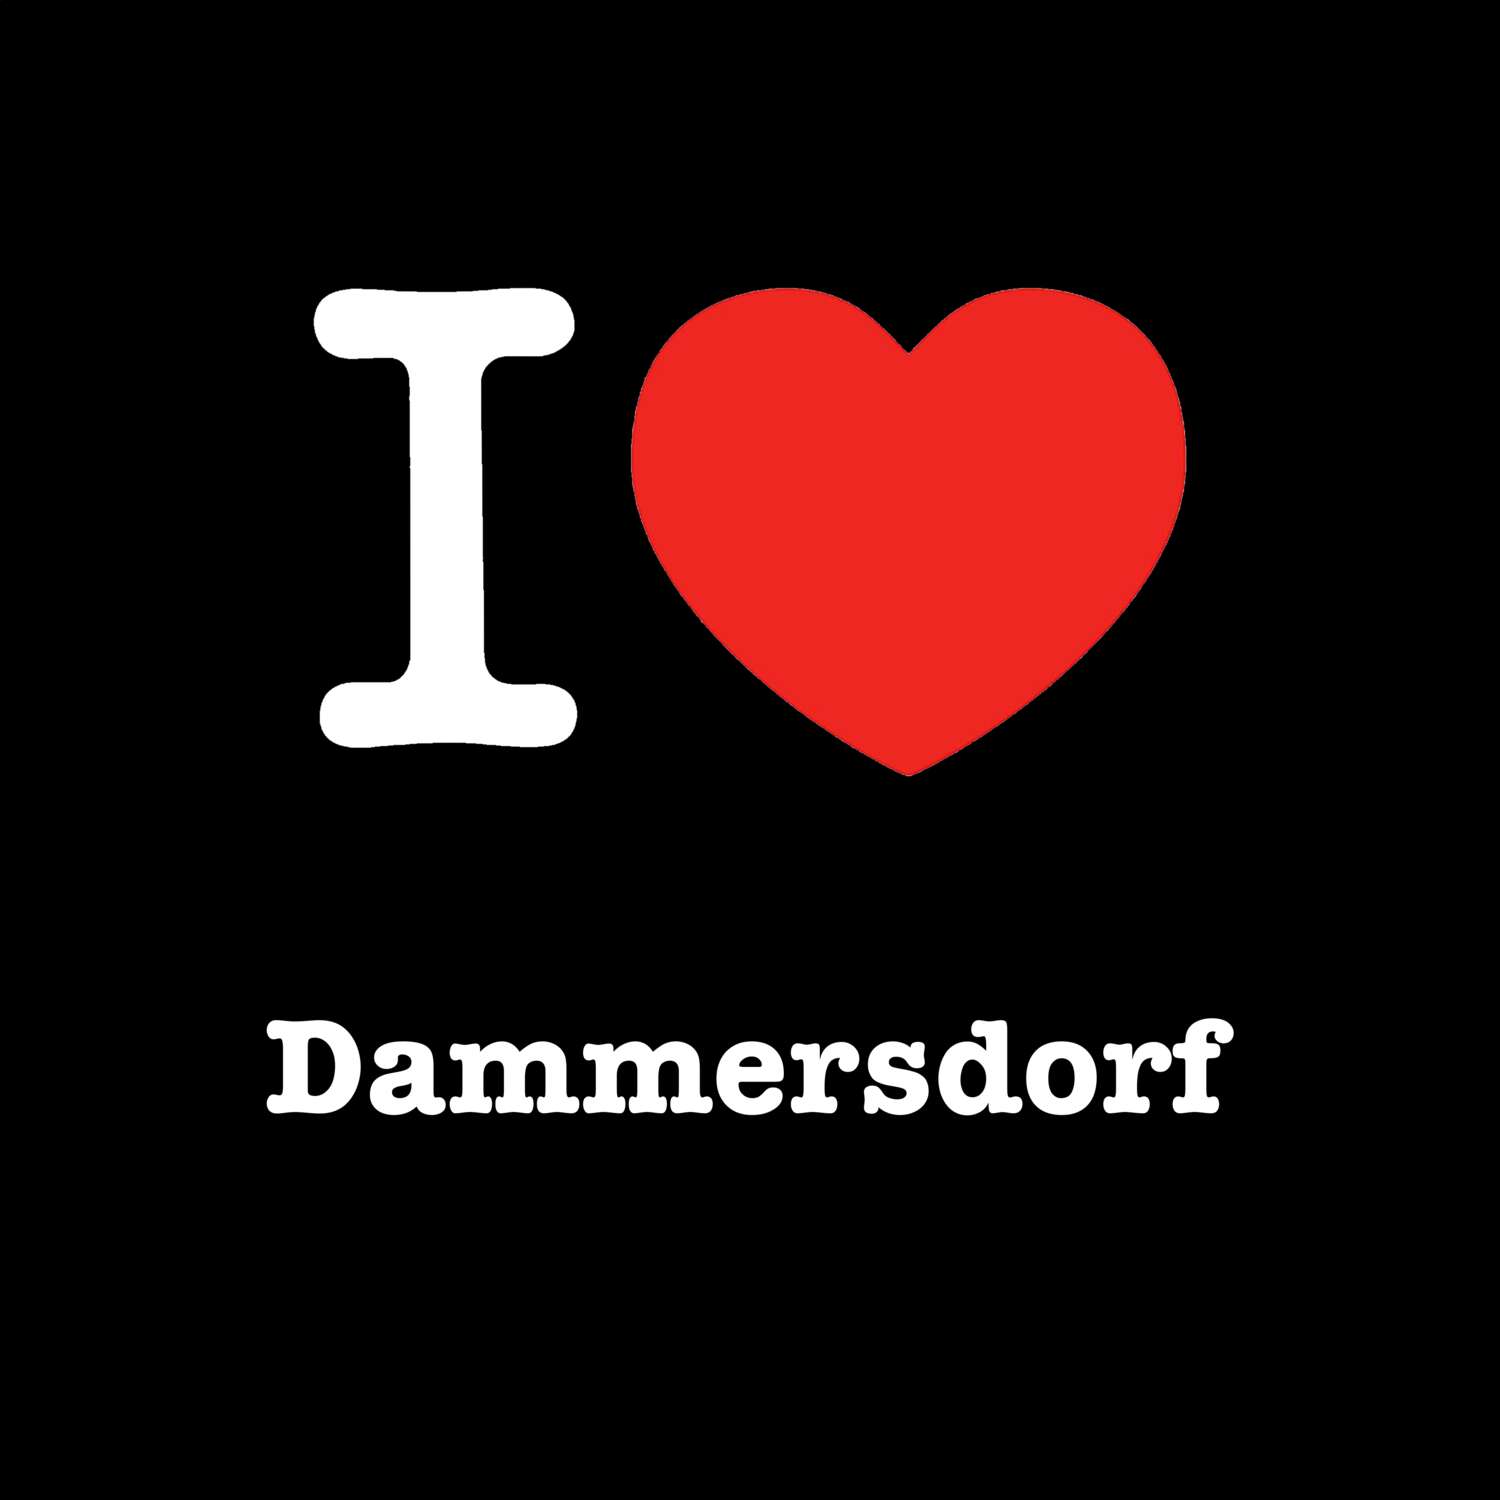 Dammersdorf T-Shirt »I love«